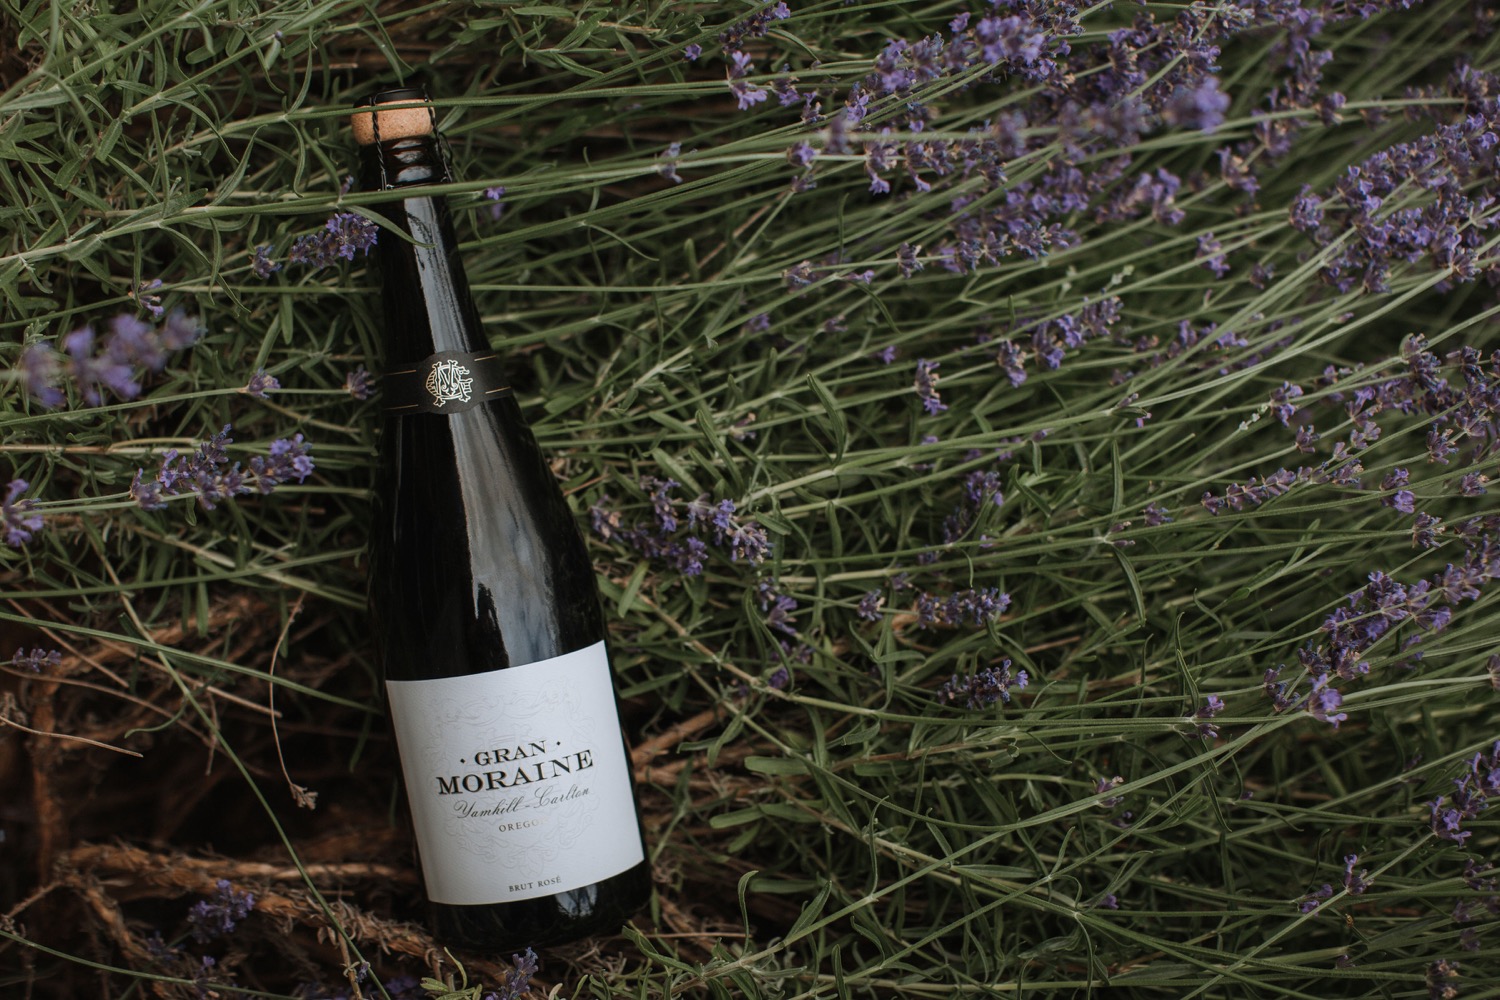 gran moraine bottle in vineyard